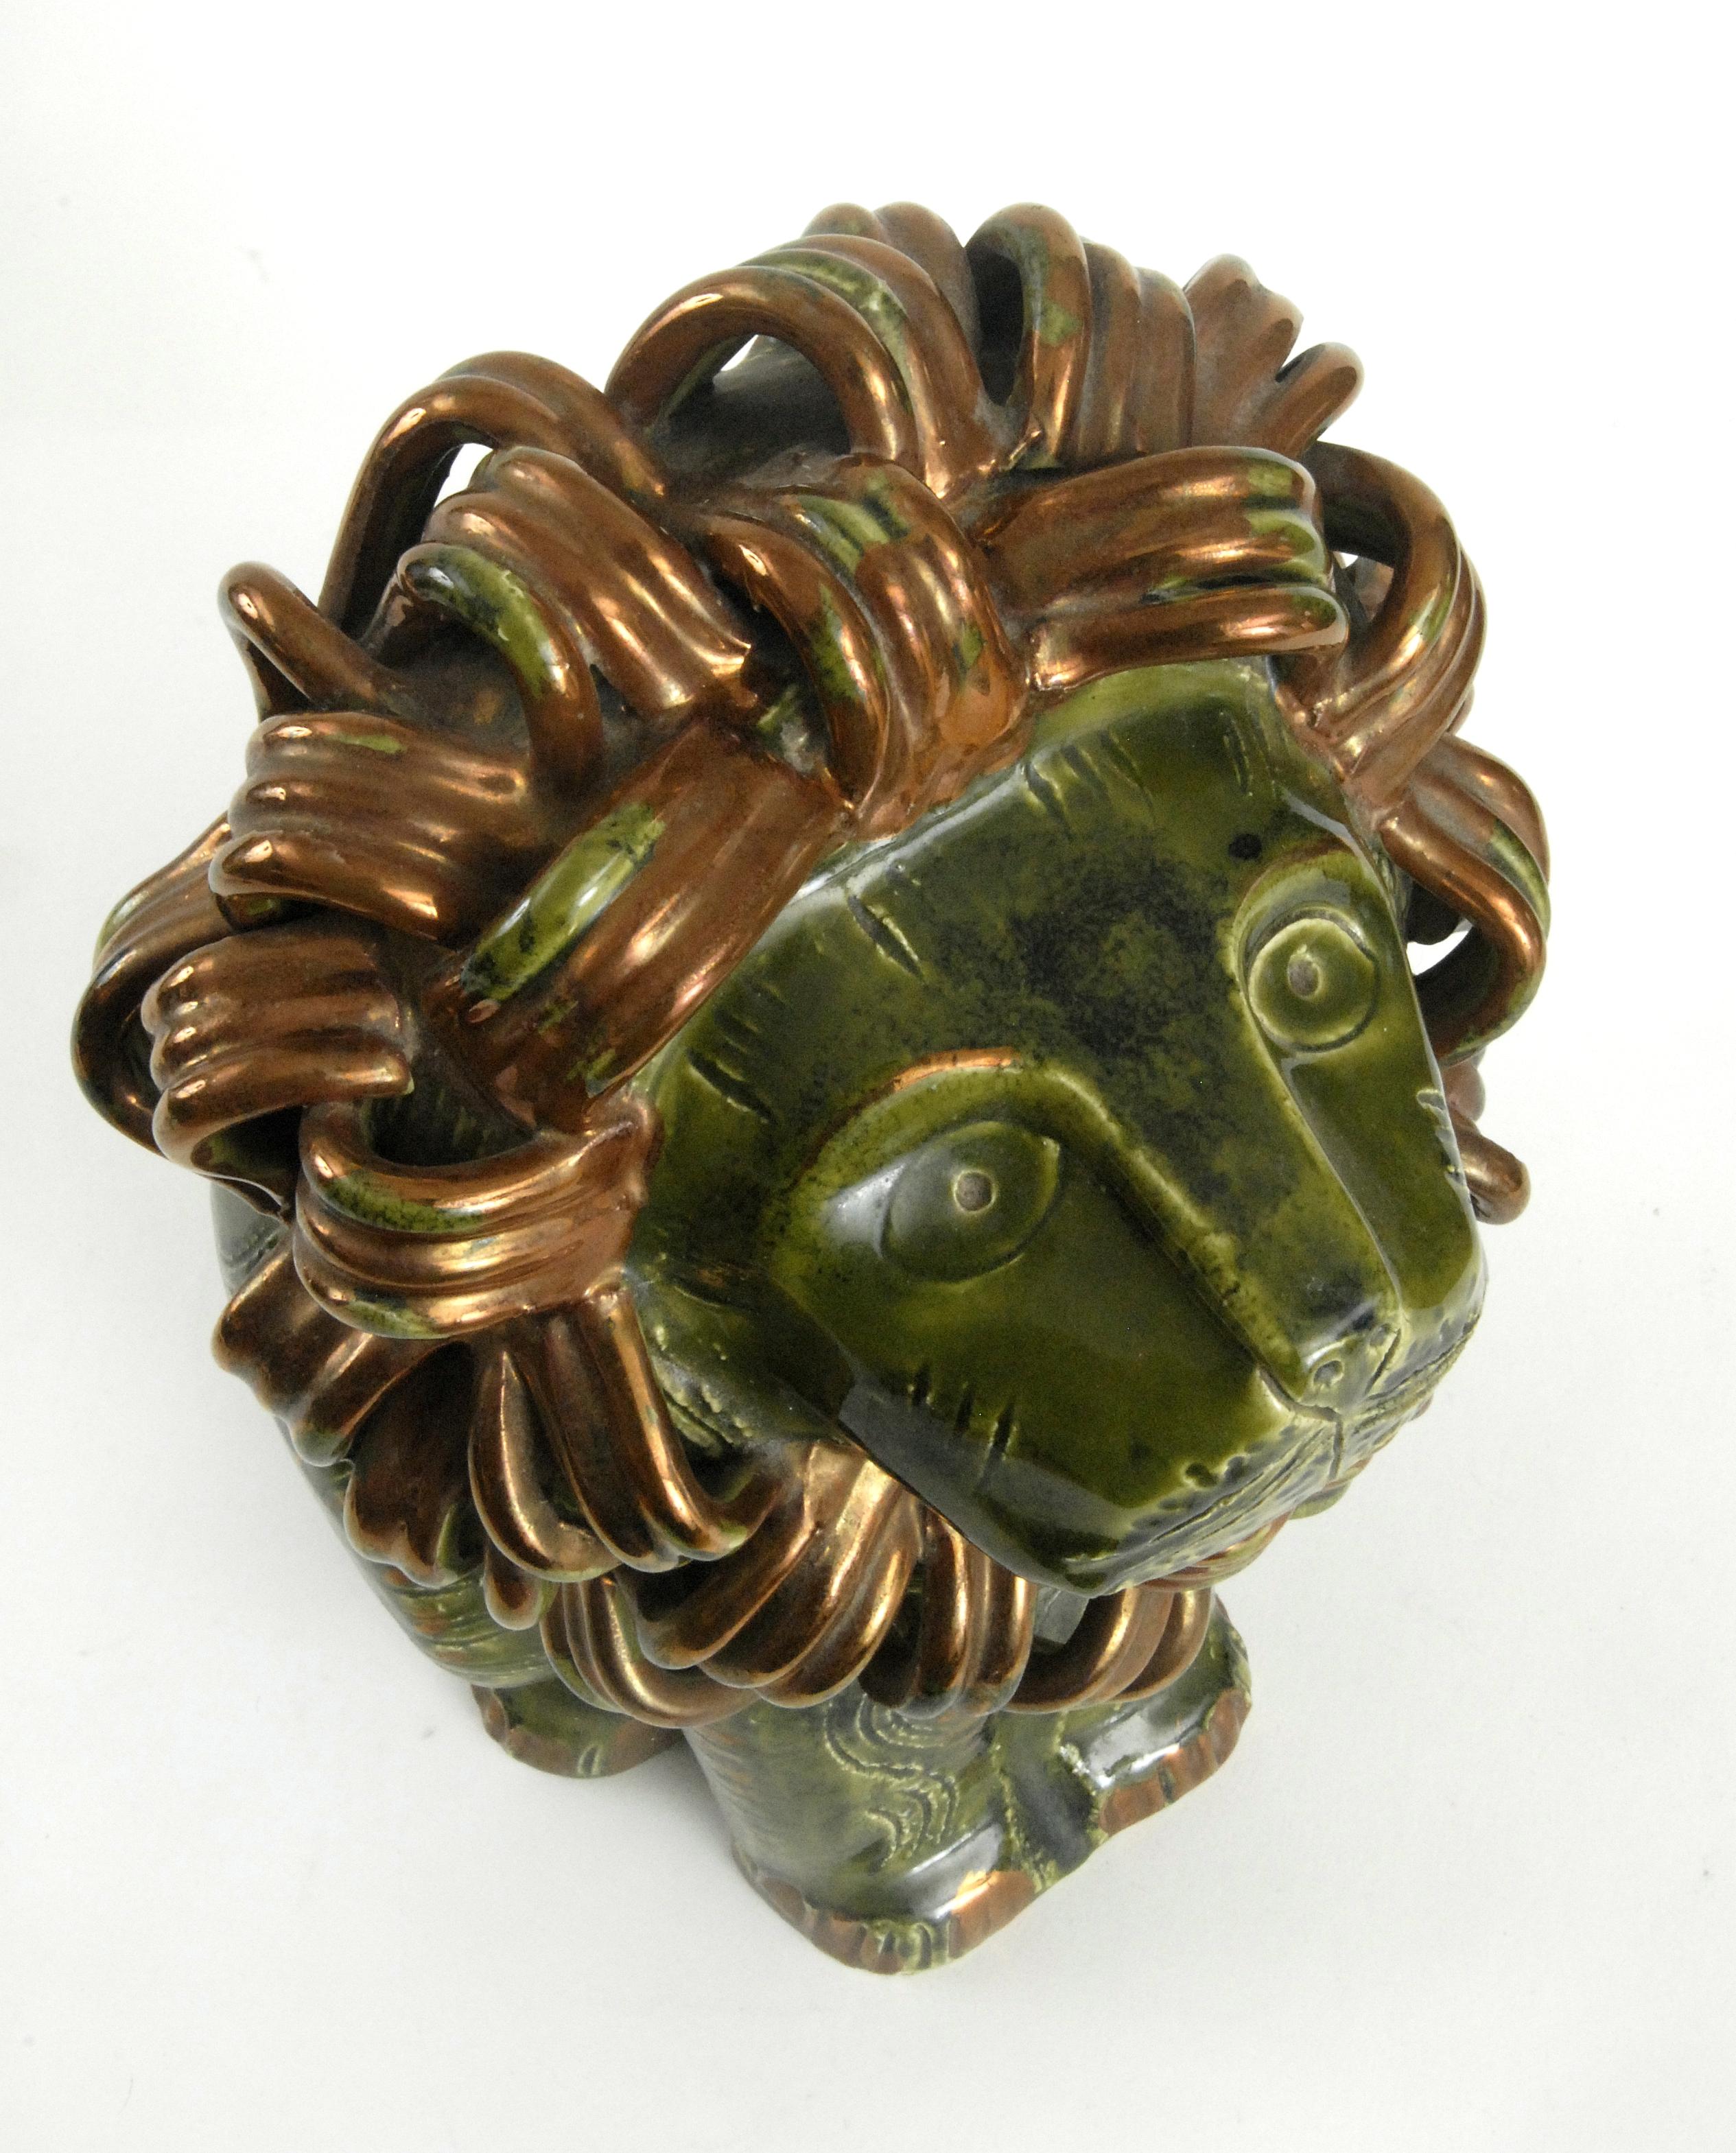 Hand-Crafted Bitossi Green and Gold Sitting Lion Aldo Londi, Italy, circa 1968